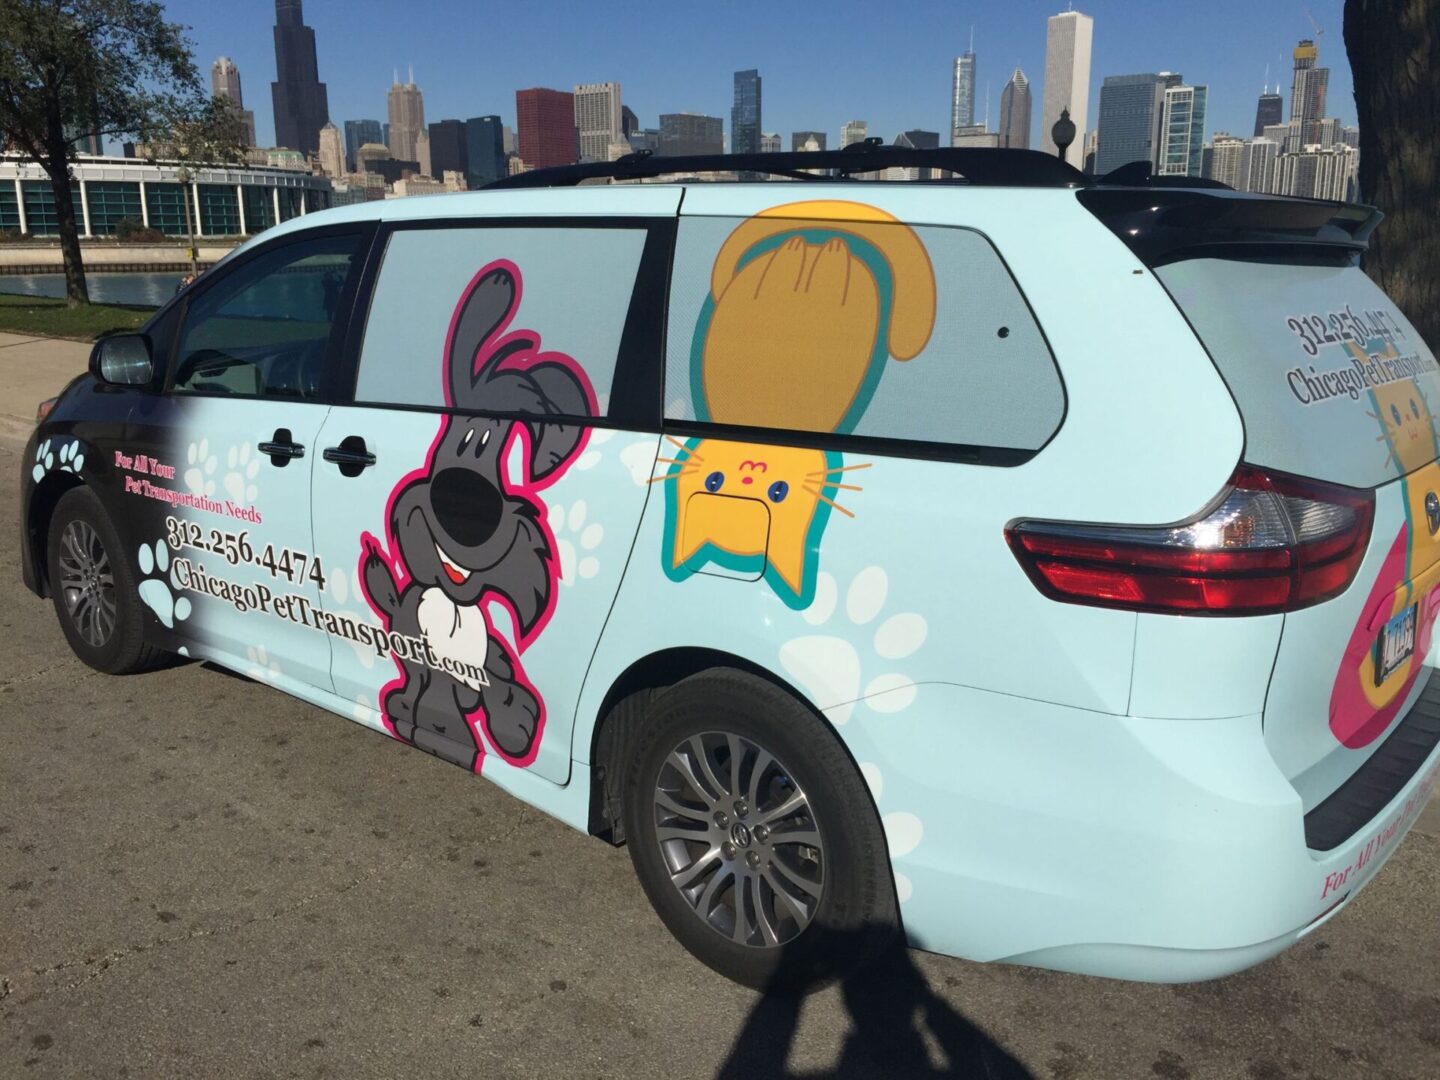 Chicago Pet Transport